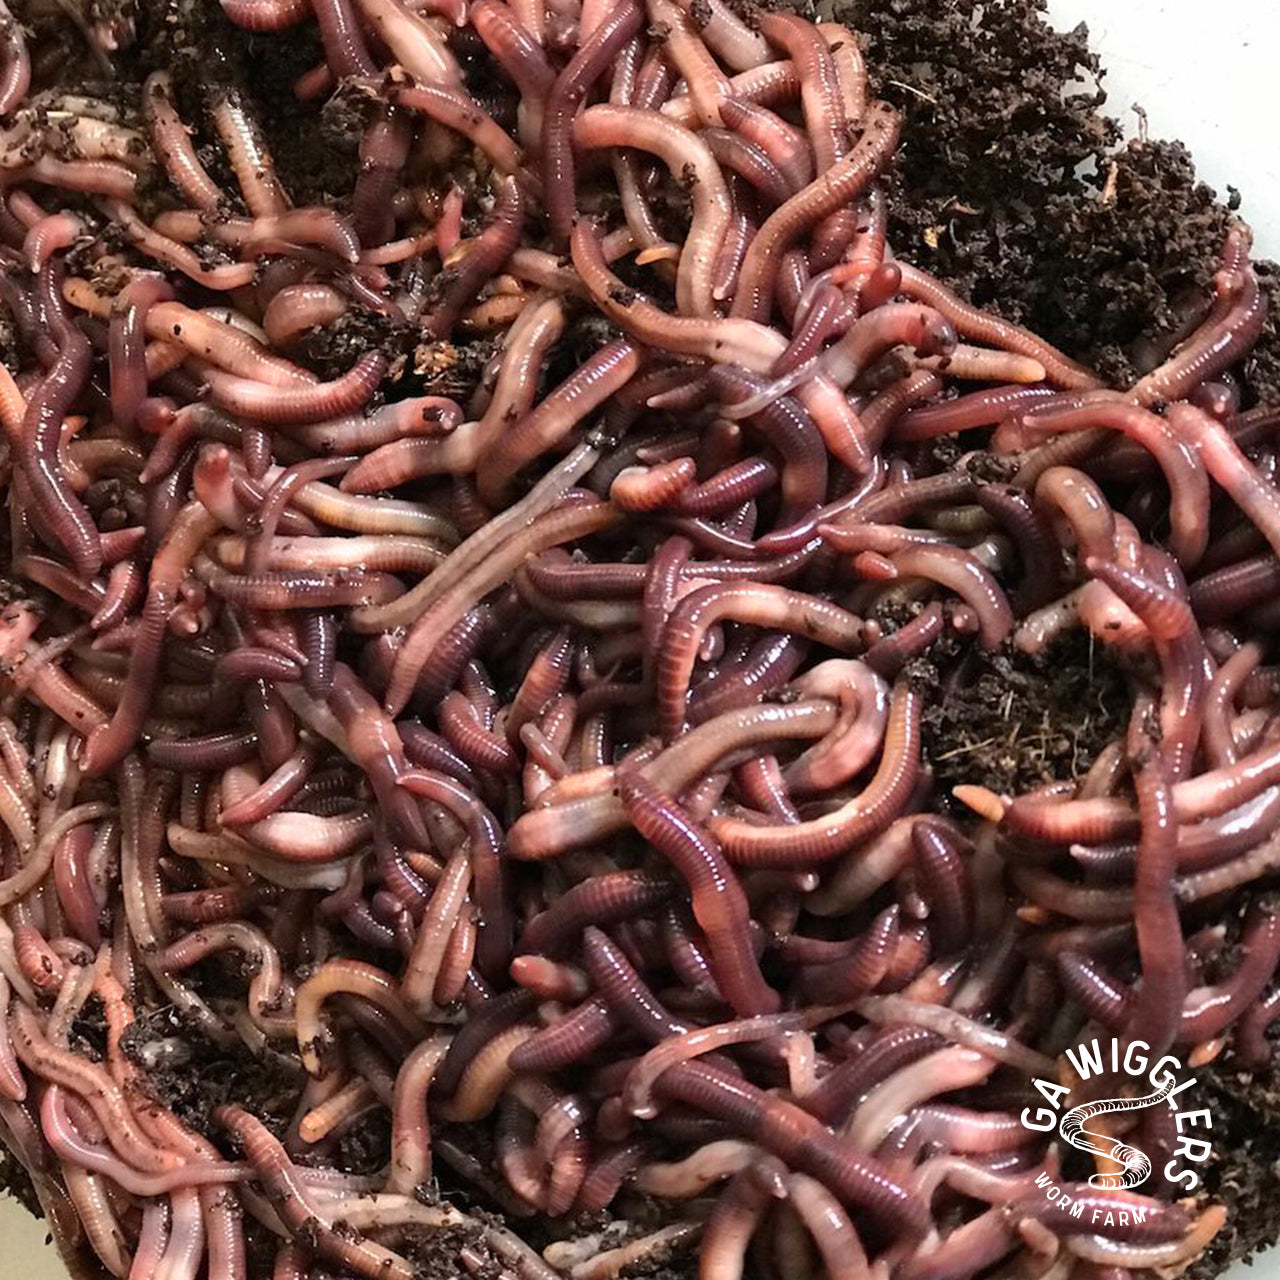 Red Wigglers Live Worms - FREE SHIPPING! – GA Wigglers Worm Farm